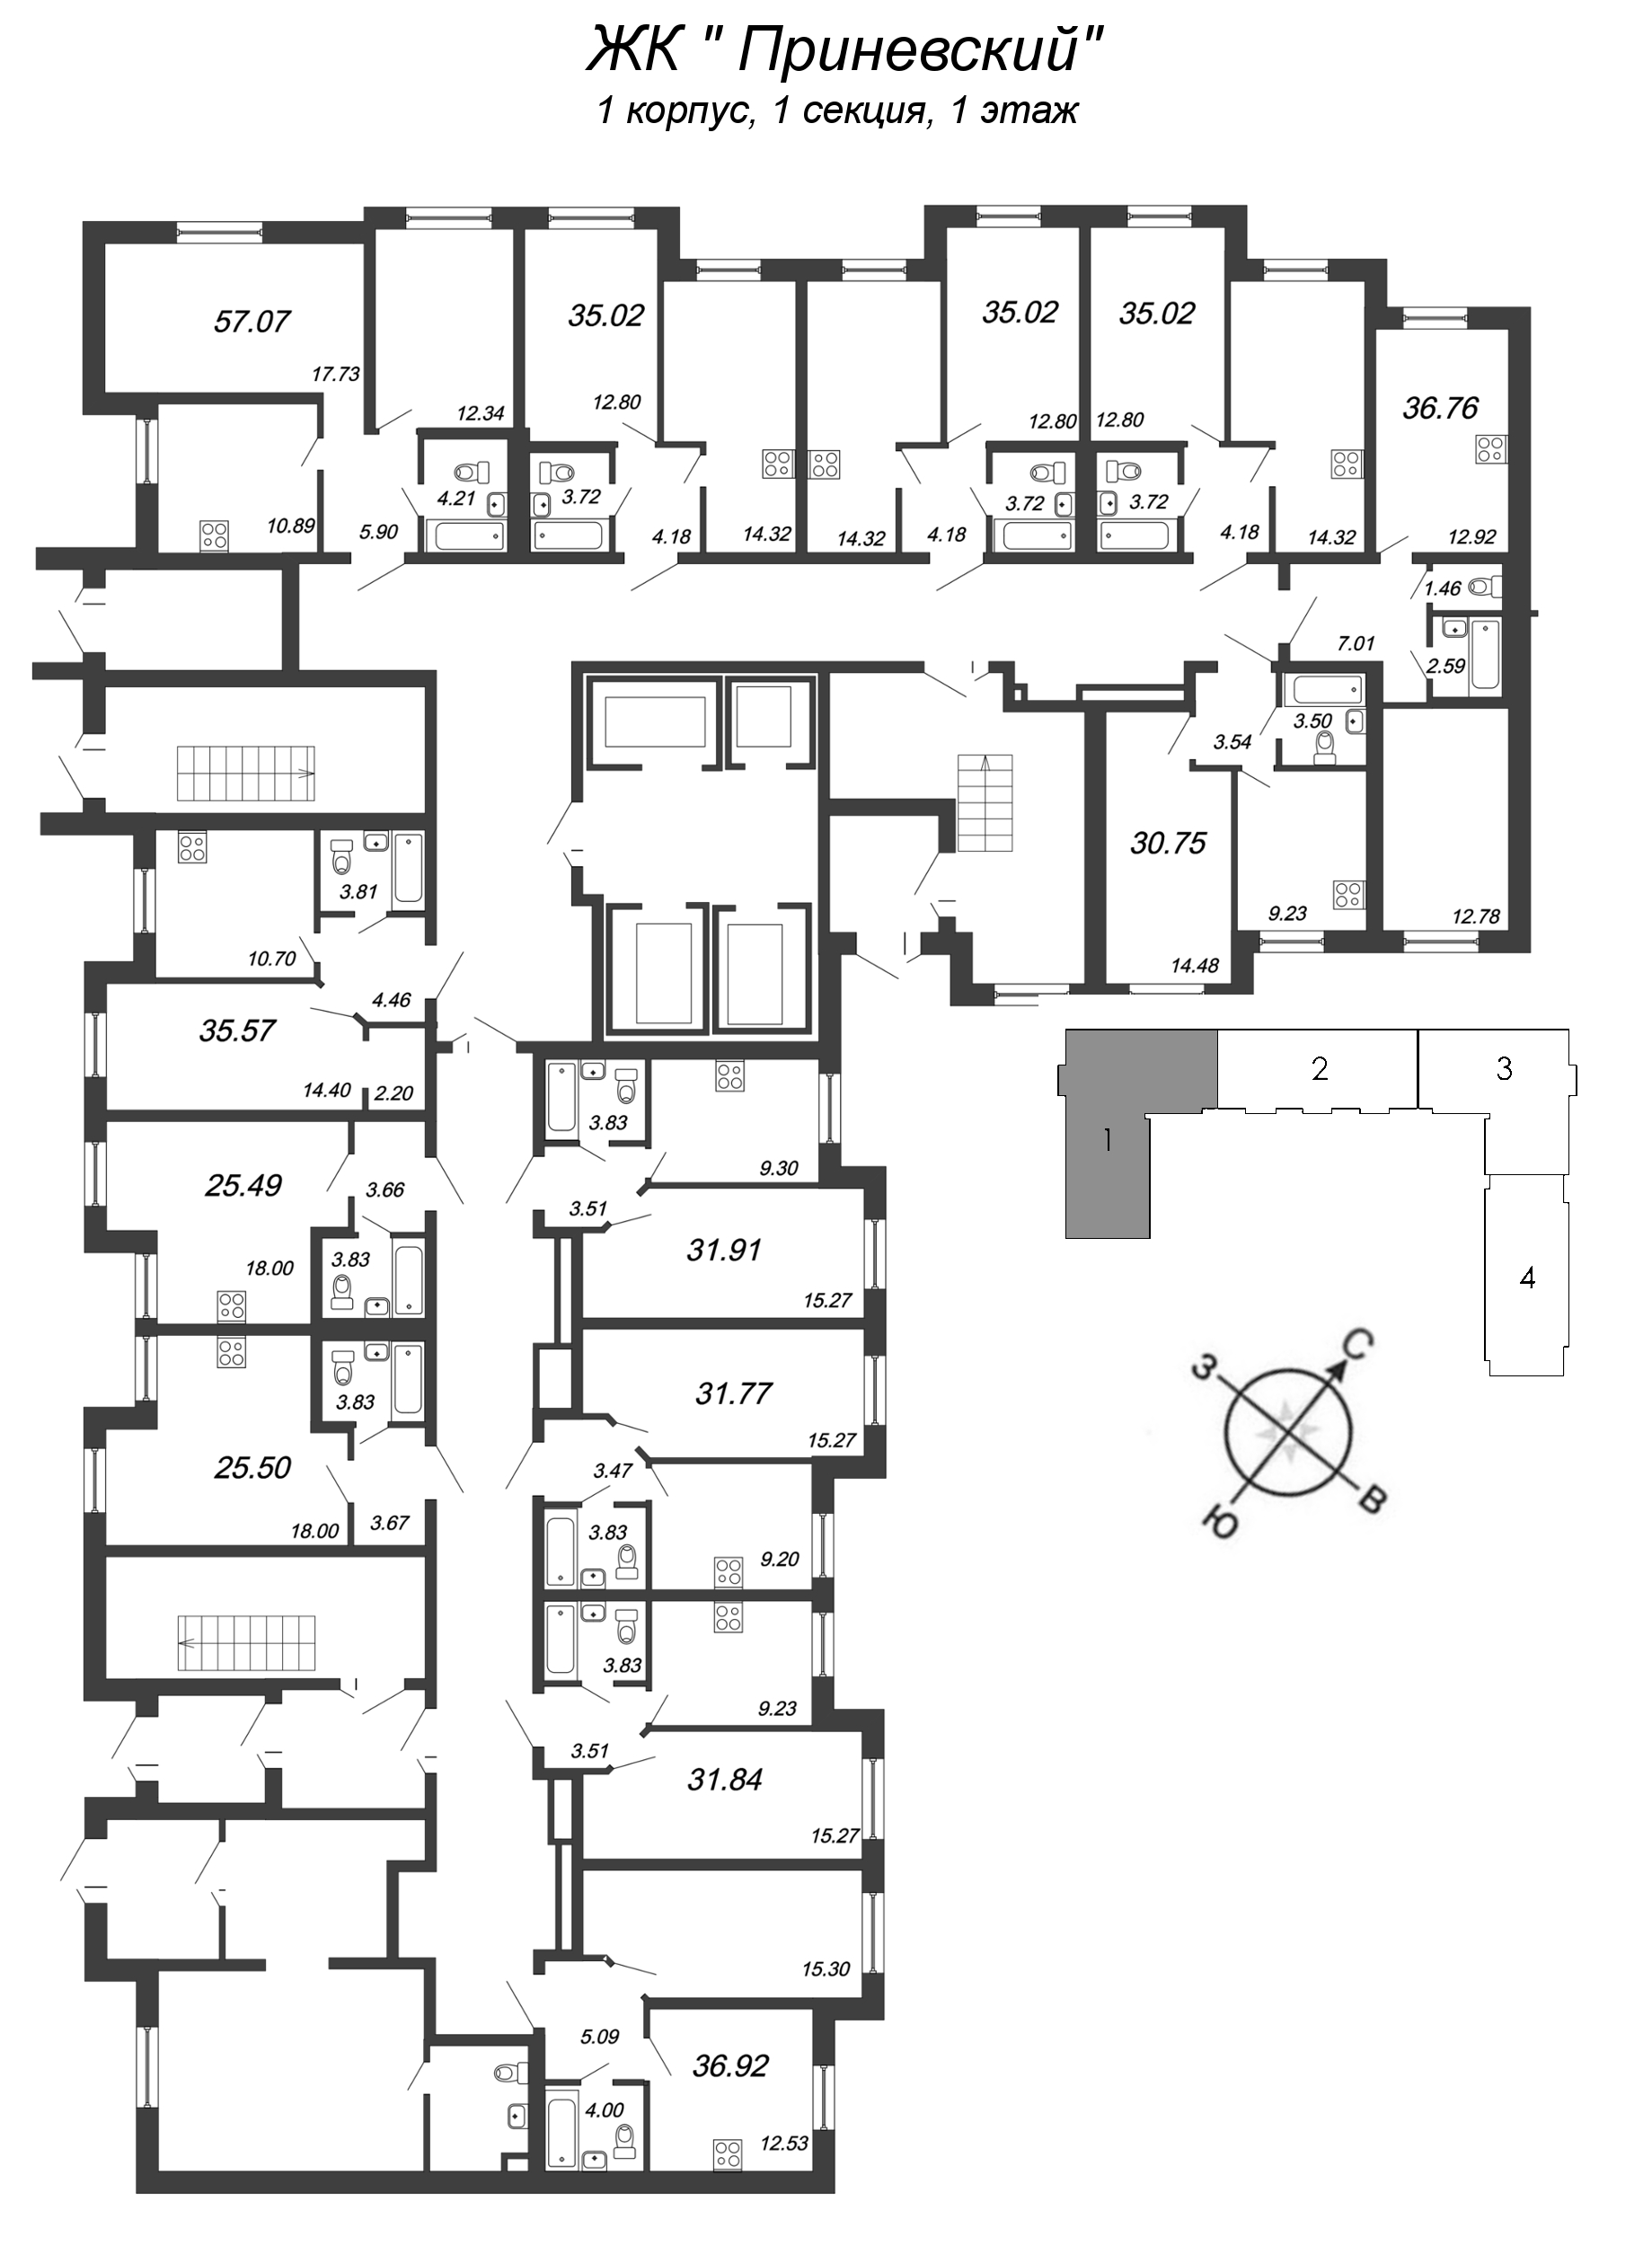 2-комнатная (Евро) квартира, 36.76 м² - планировка этажа